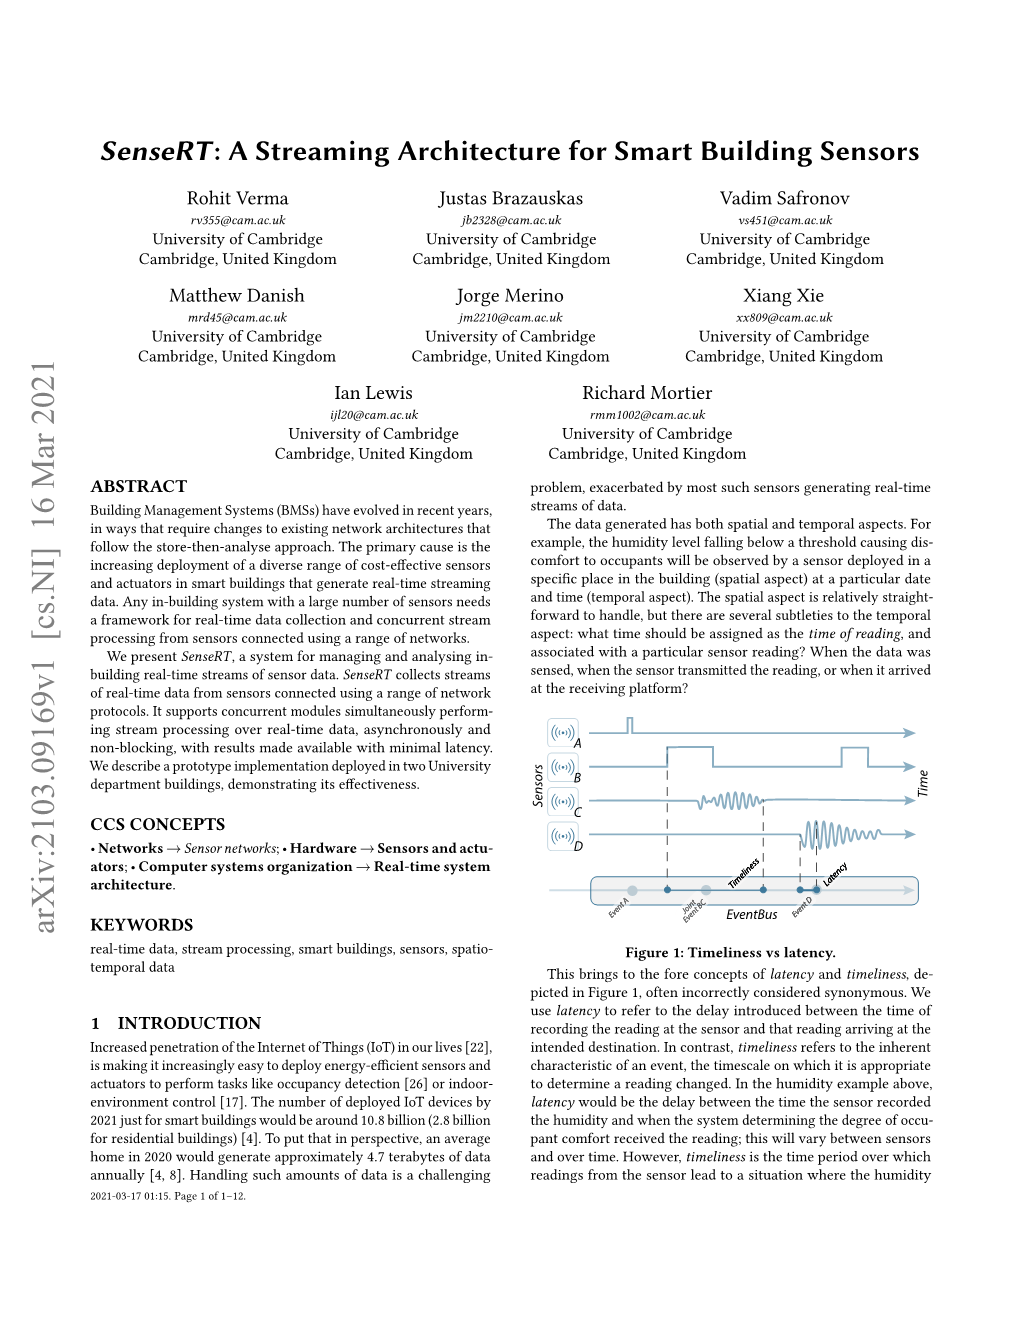 Sensert: a Streaming Architecture for Smart Building Sensors